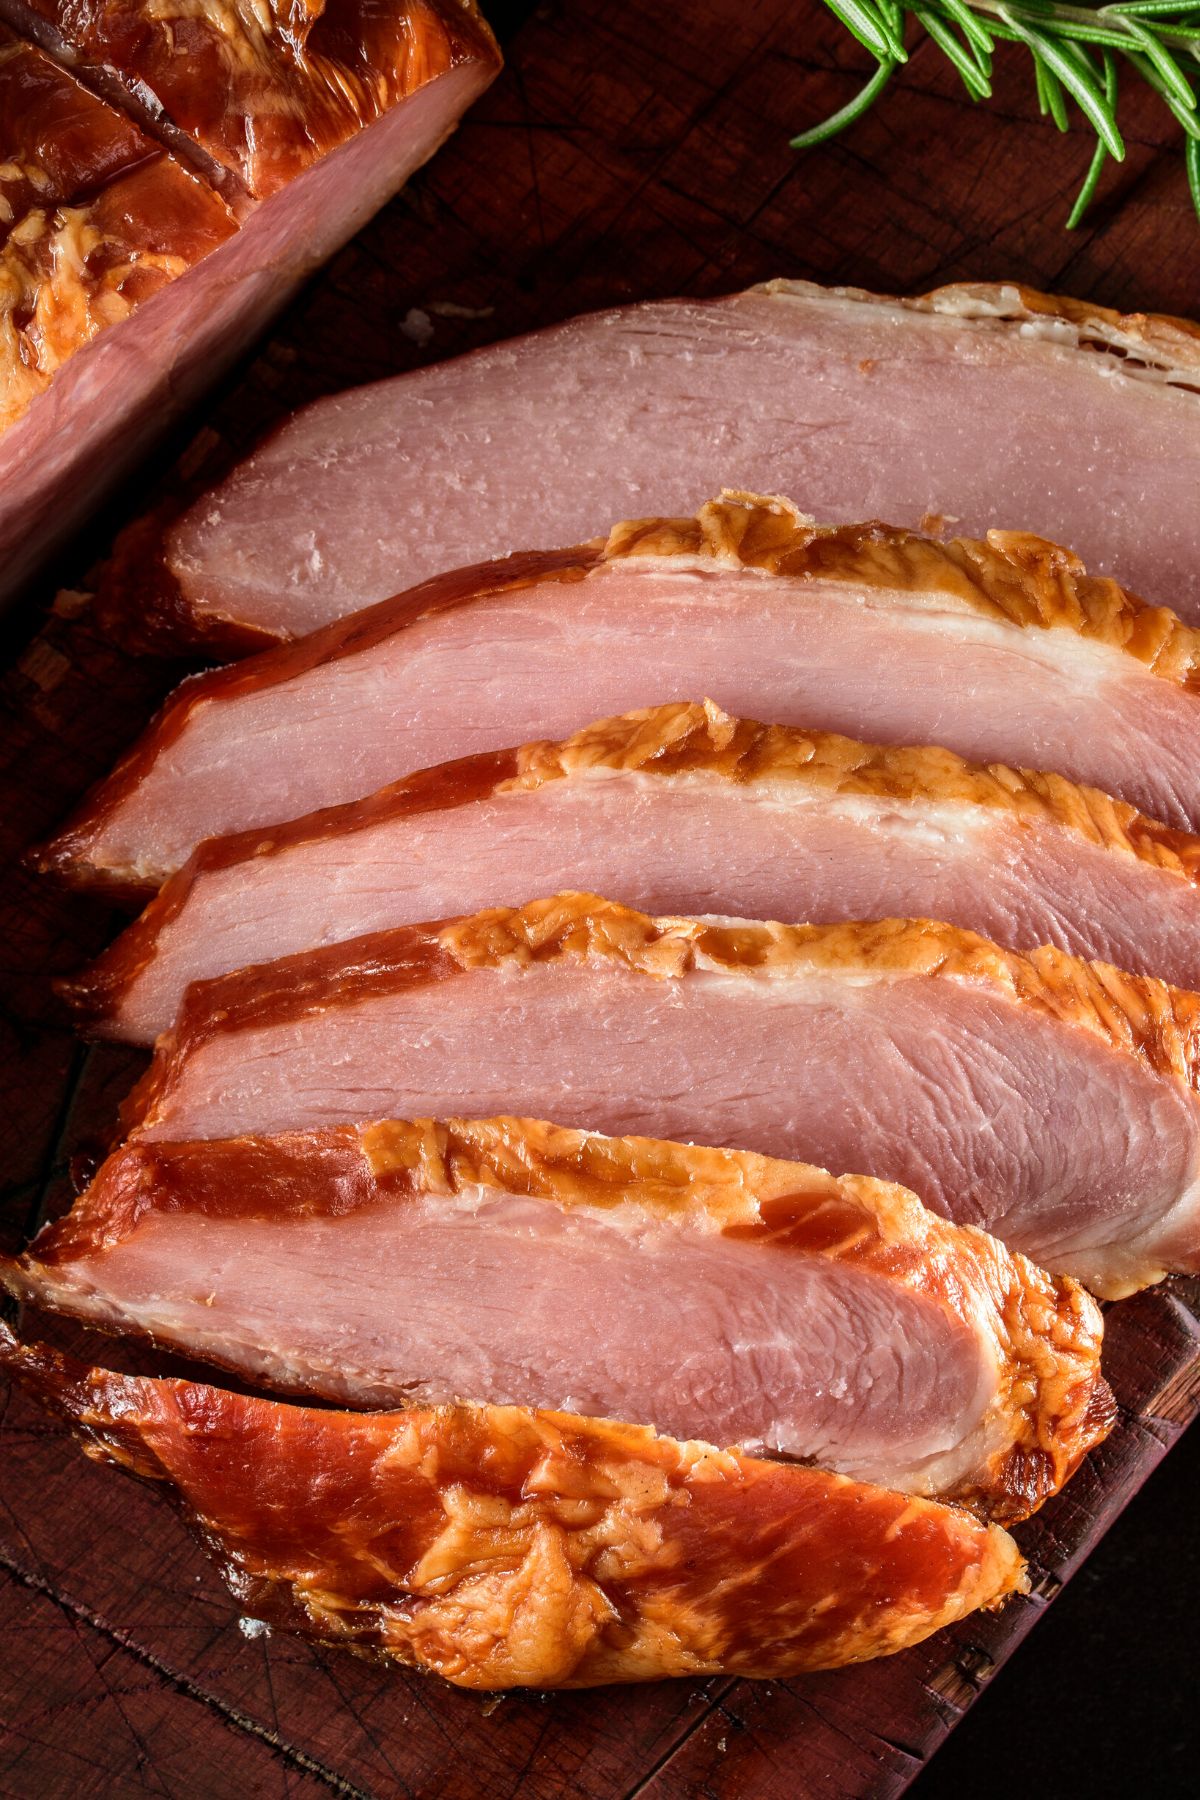 Closeup of slices of baked, glazed ham.